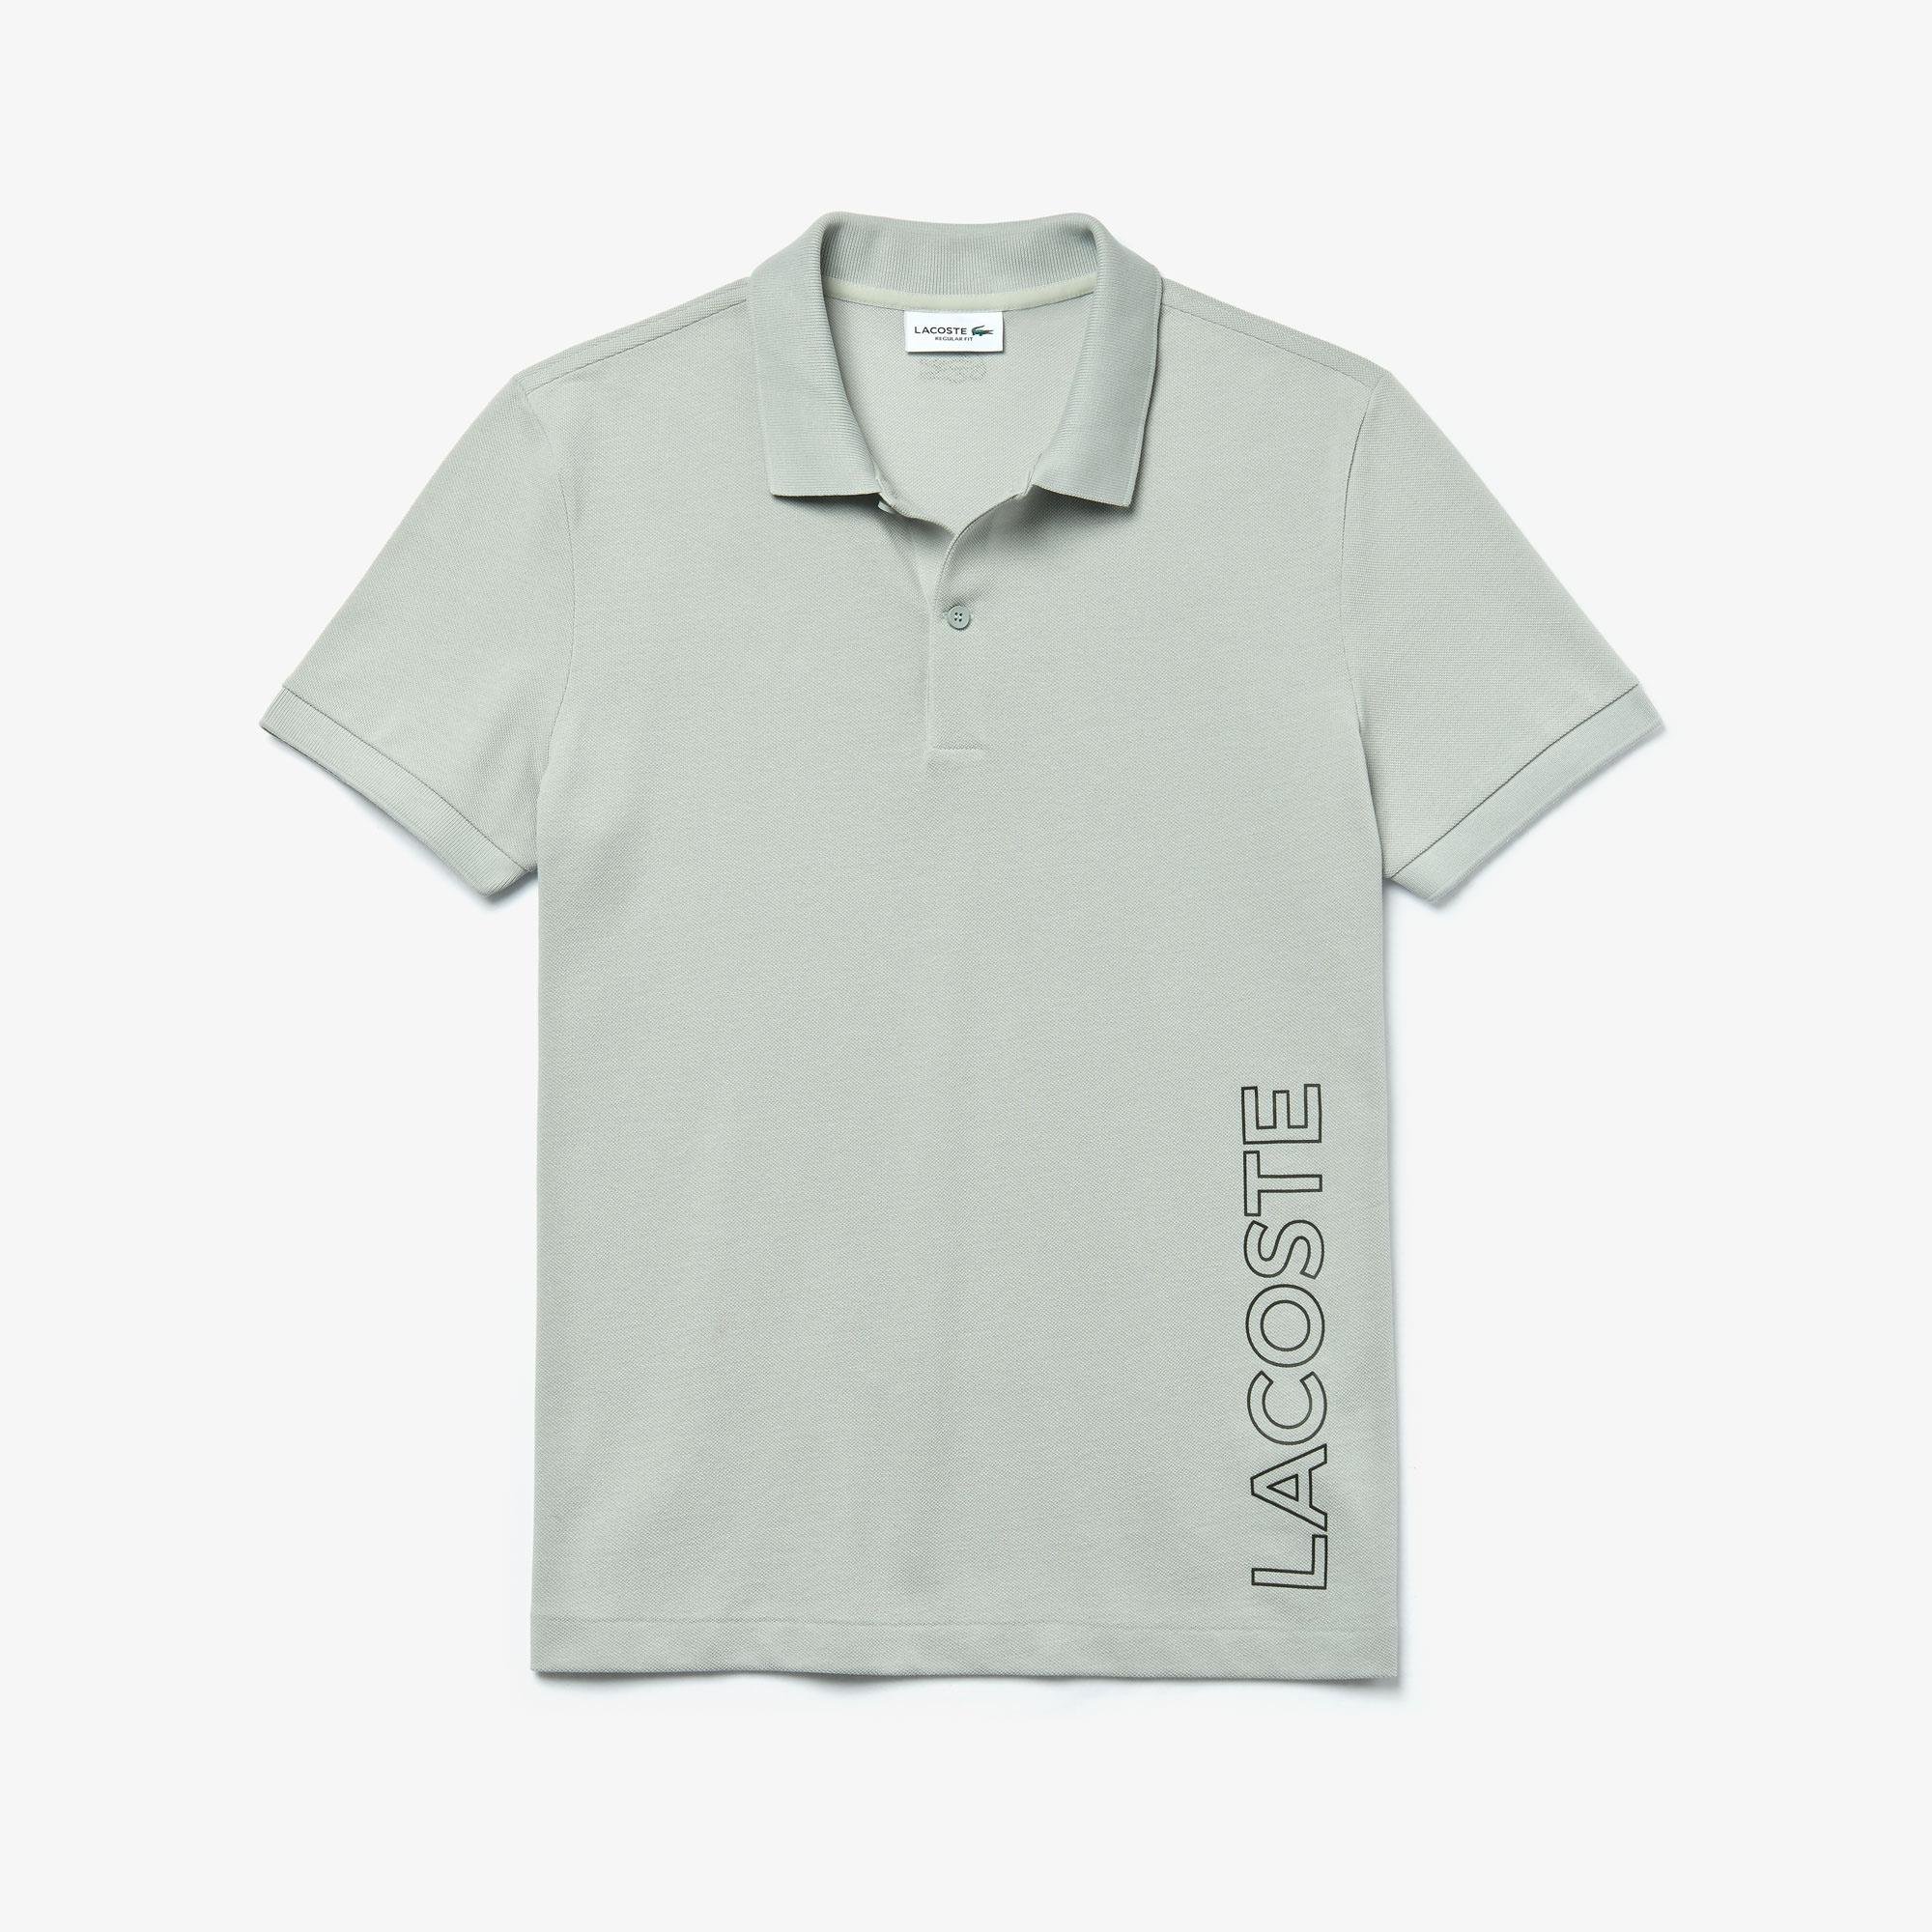 Lacoste Men's Branded Cotton Polo Shirt